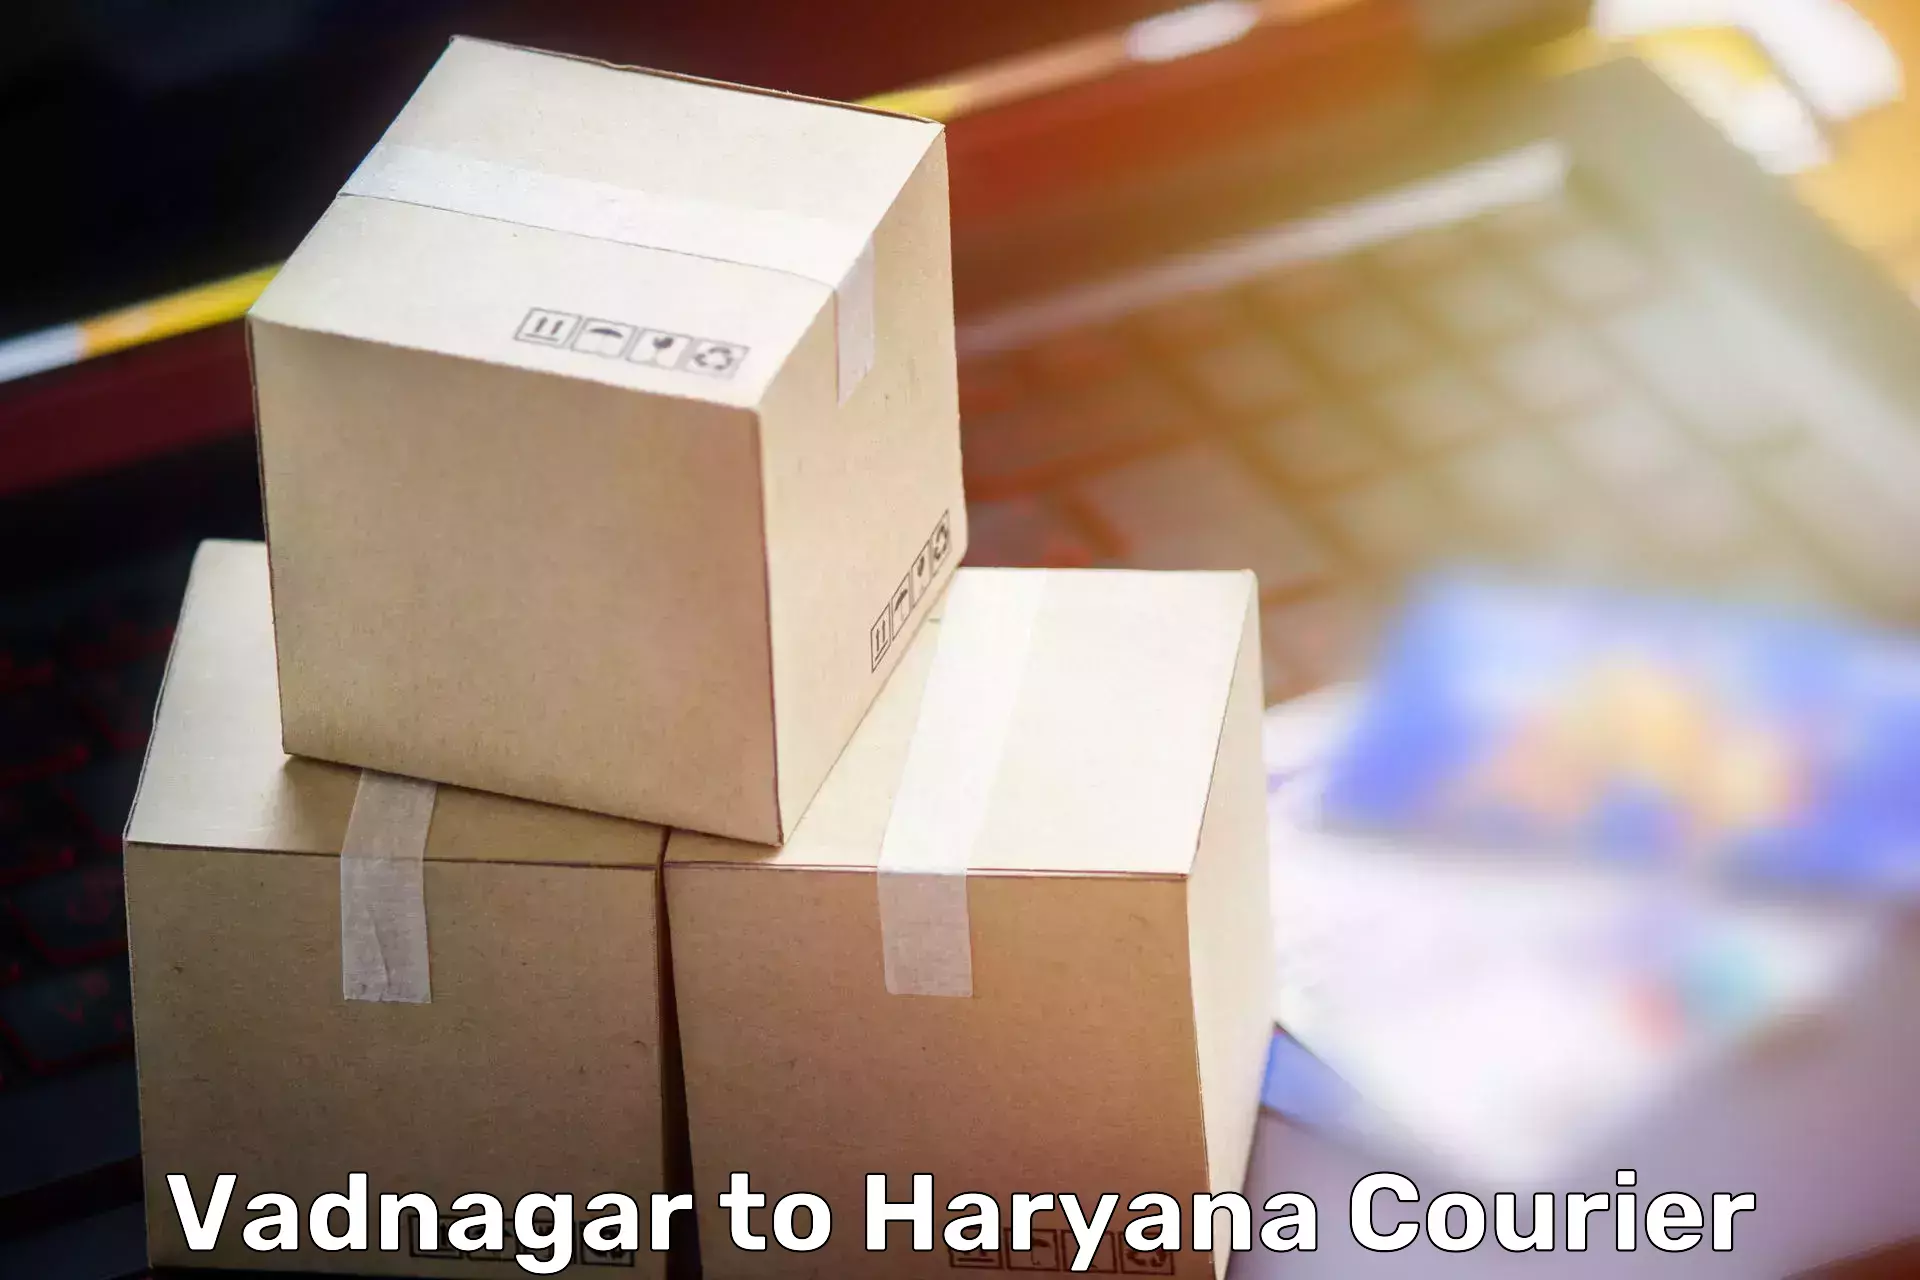 Efficient relocation services Vadnagar to Gurugram